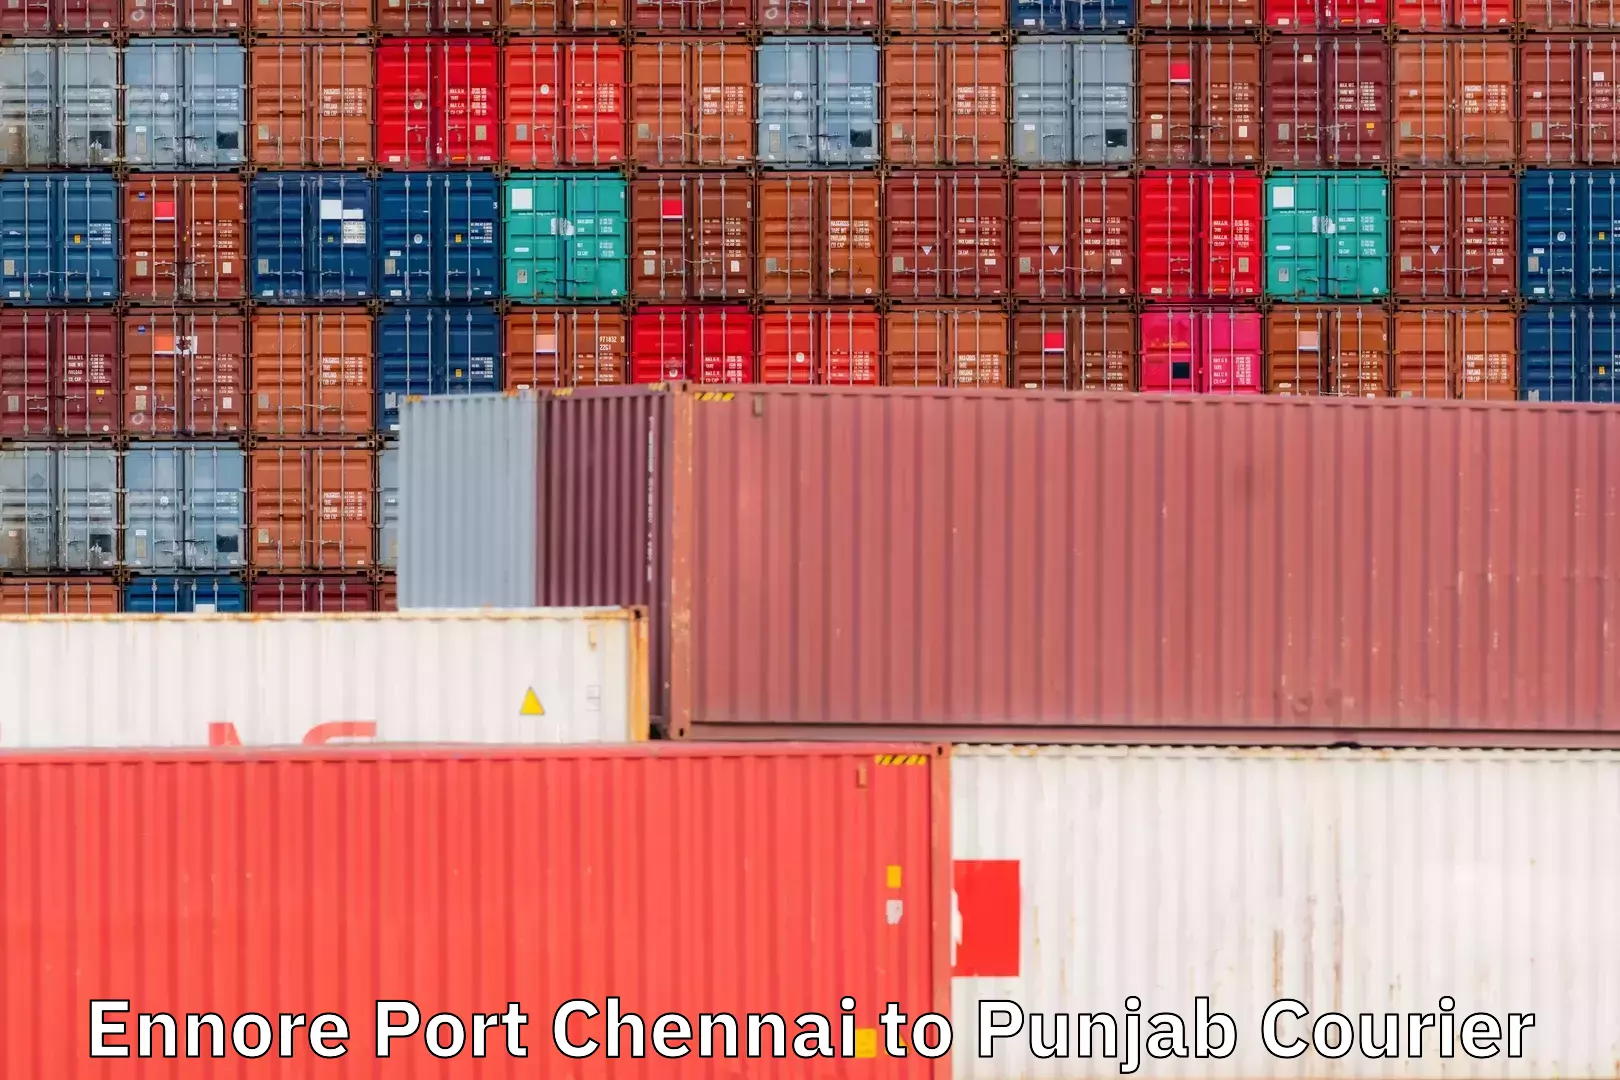 Ground shipping in Ennore Port Chennai to Punjab